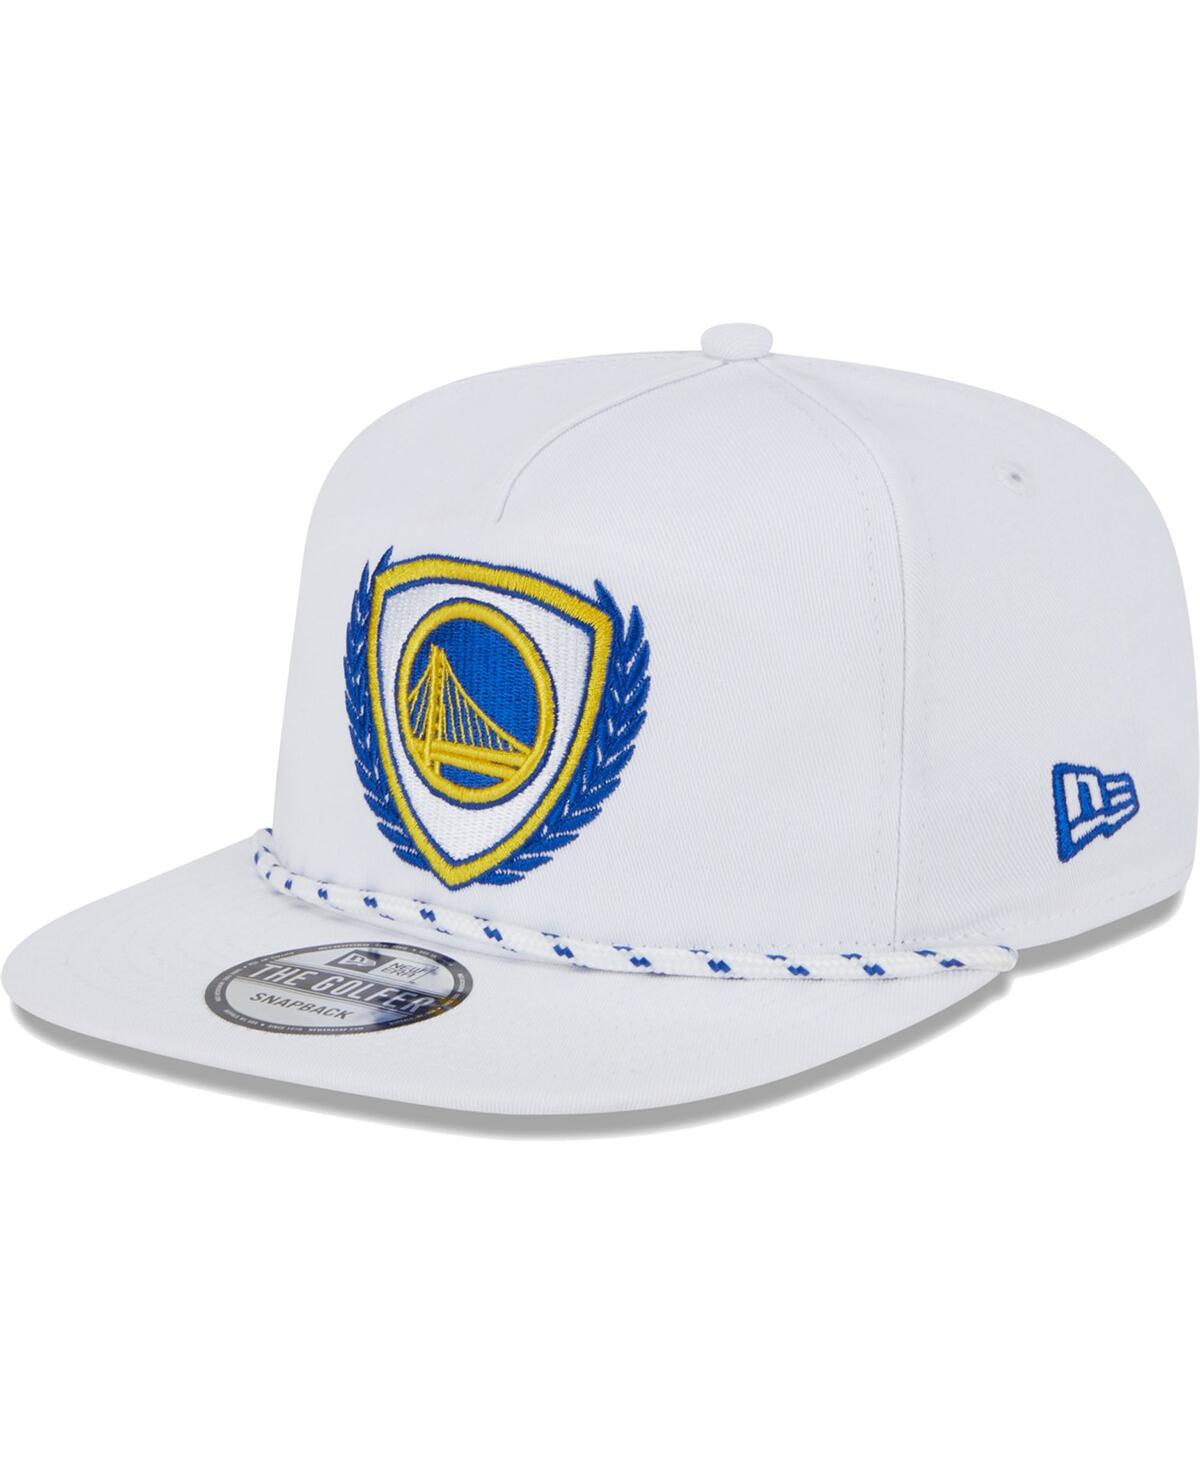 Shop New Era Men's  White Golden State Warriors The Golfer Crest Snapback Hat